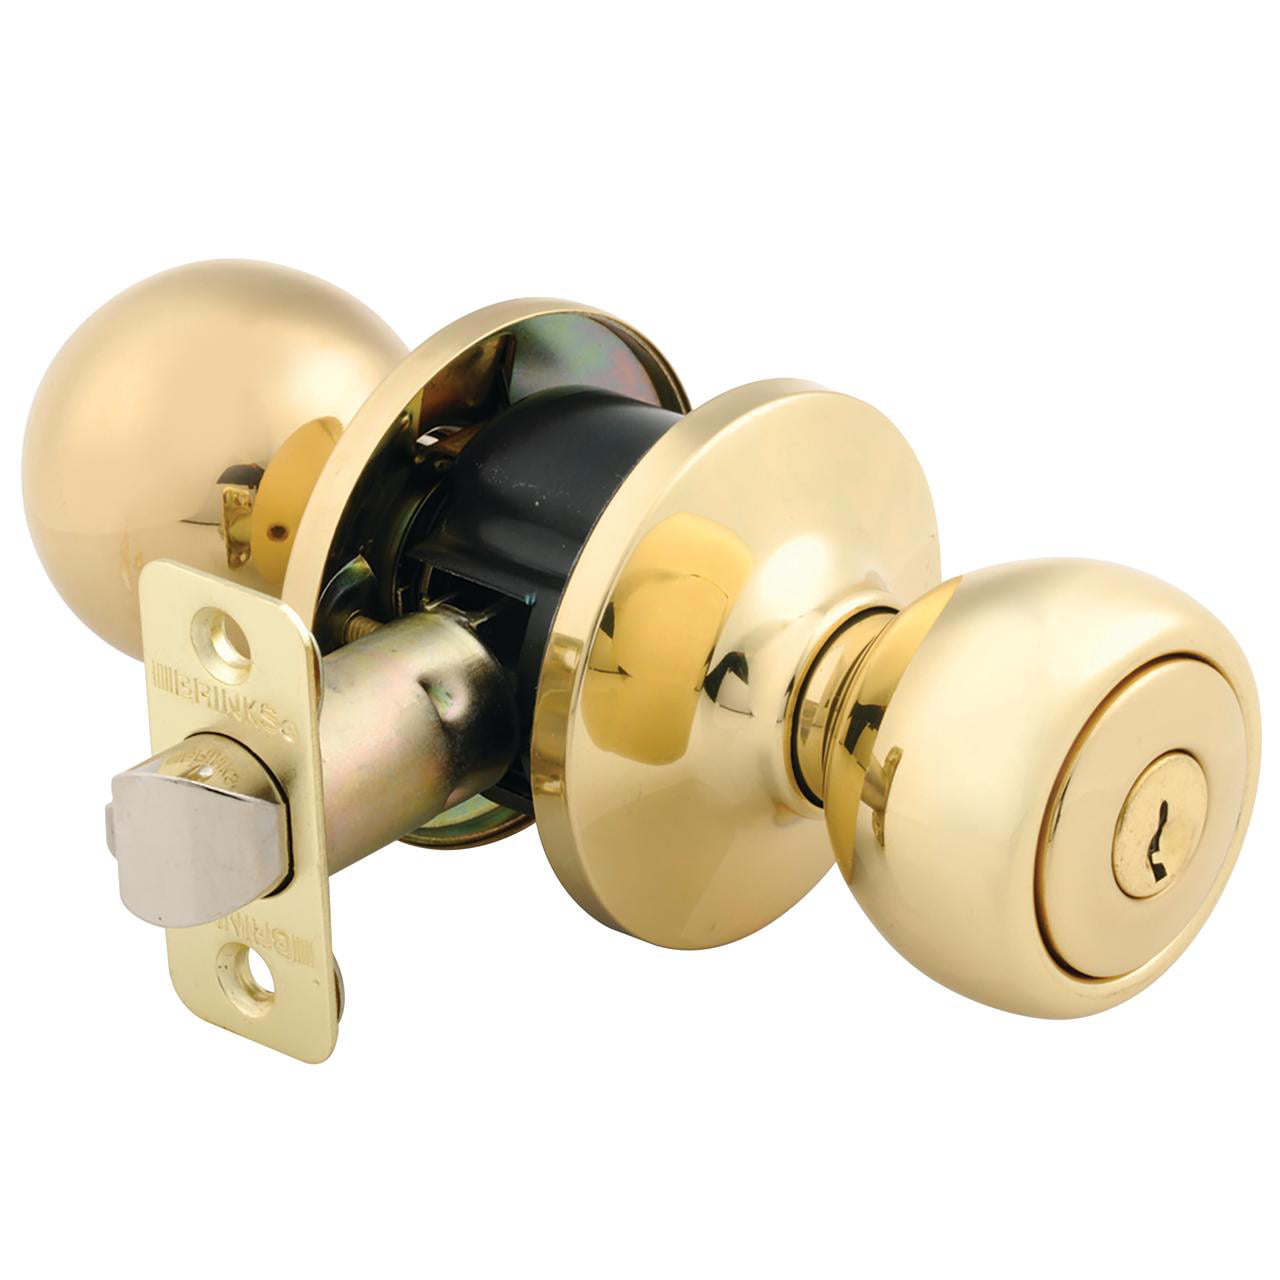 Polished Brass Brinks 2108-105 Ball Style Keyed Alike Entry Knob and Deadbolt